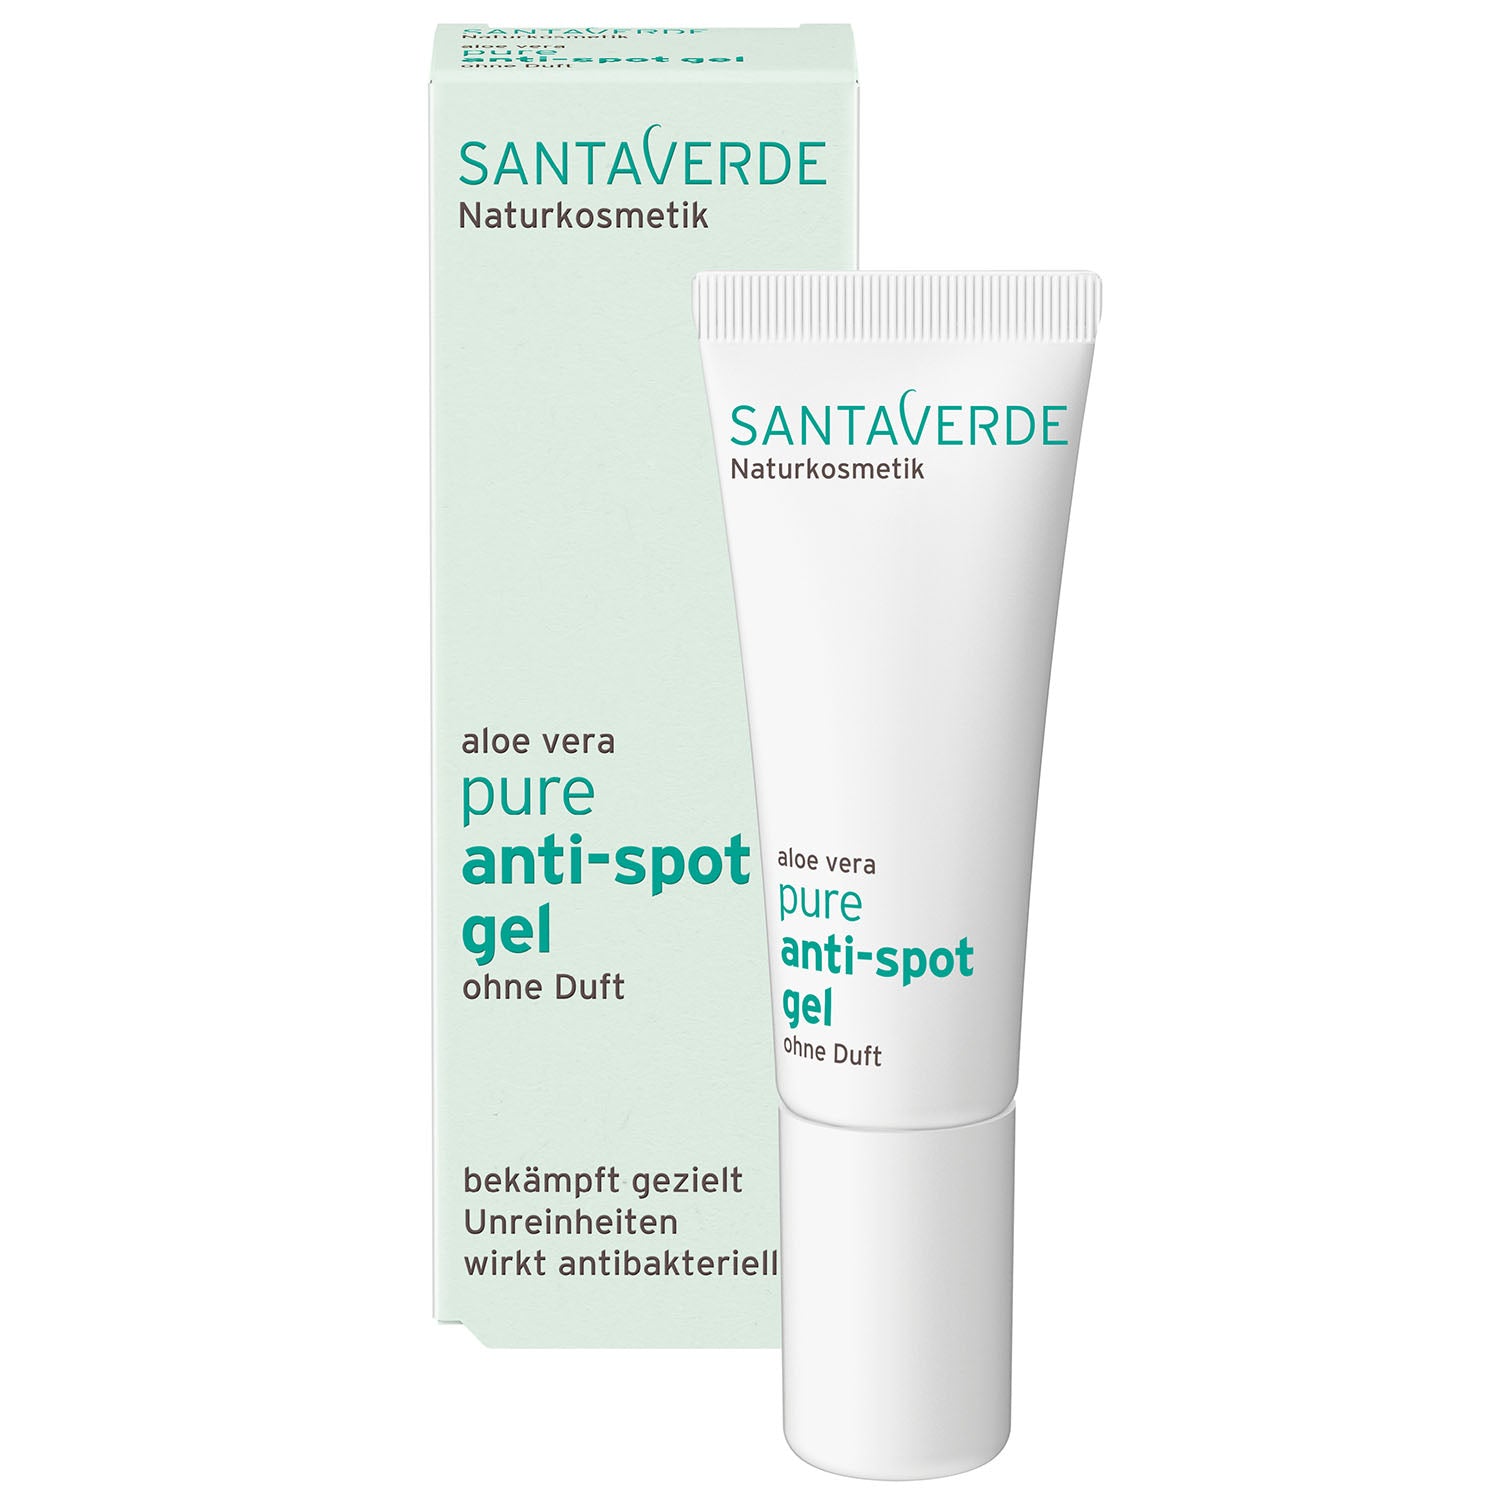 Santaverde pure anti-spot gel ohne Duft (2)